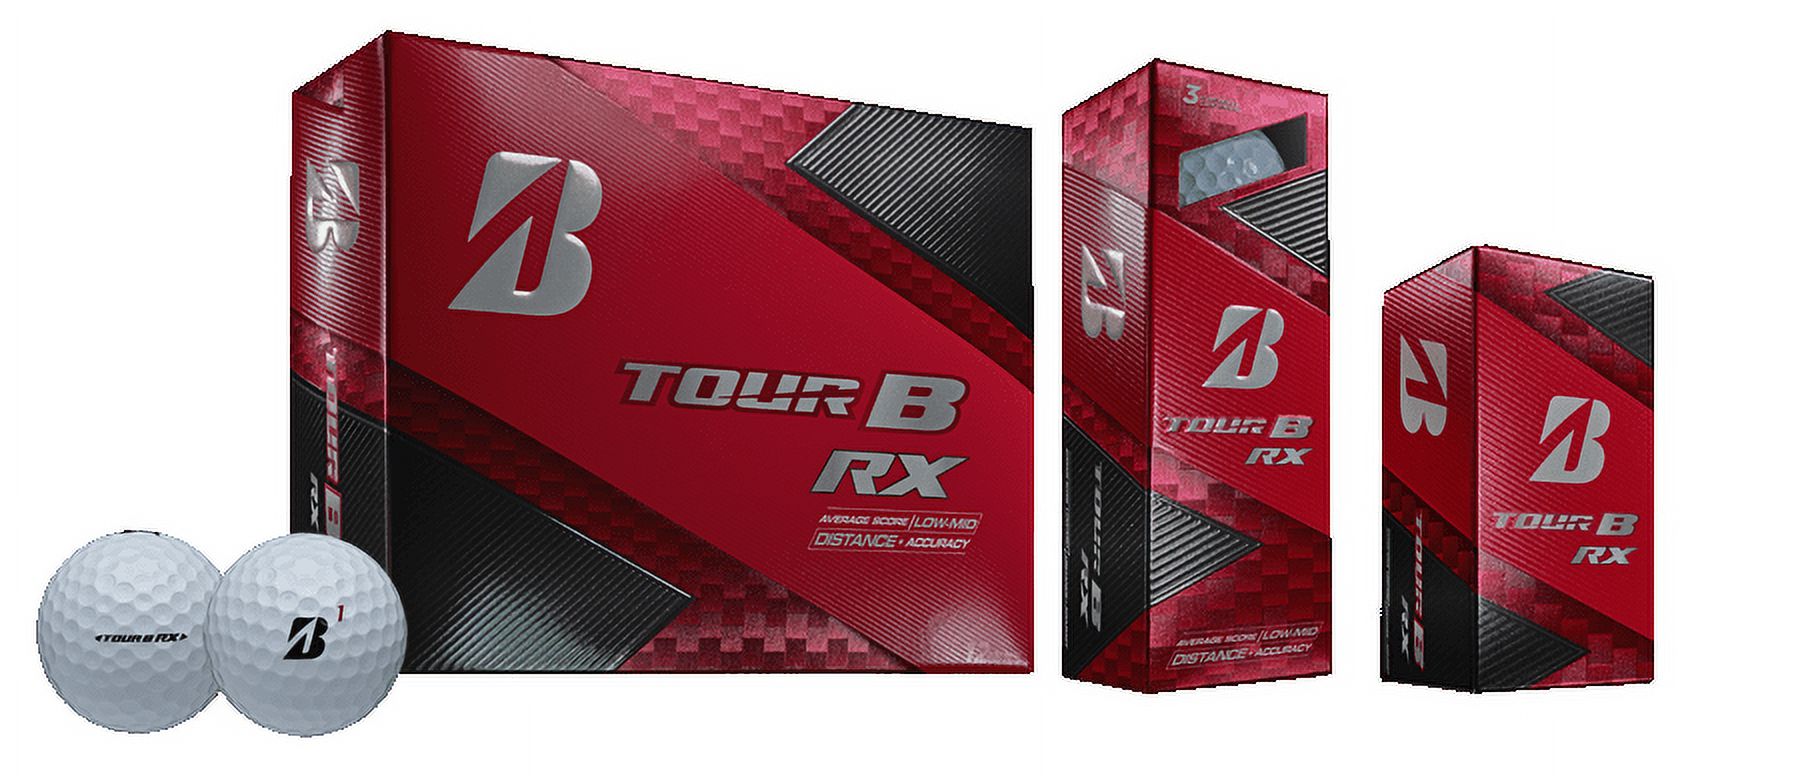 Bridgestone Golf Tour B RX Golf Balls, 12 Pack - image 3 of 4